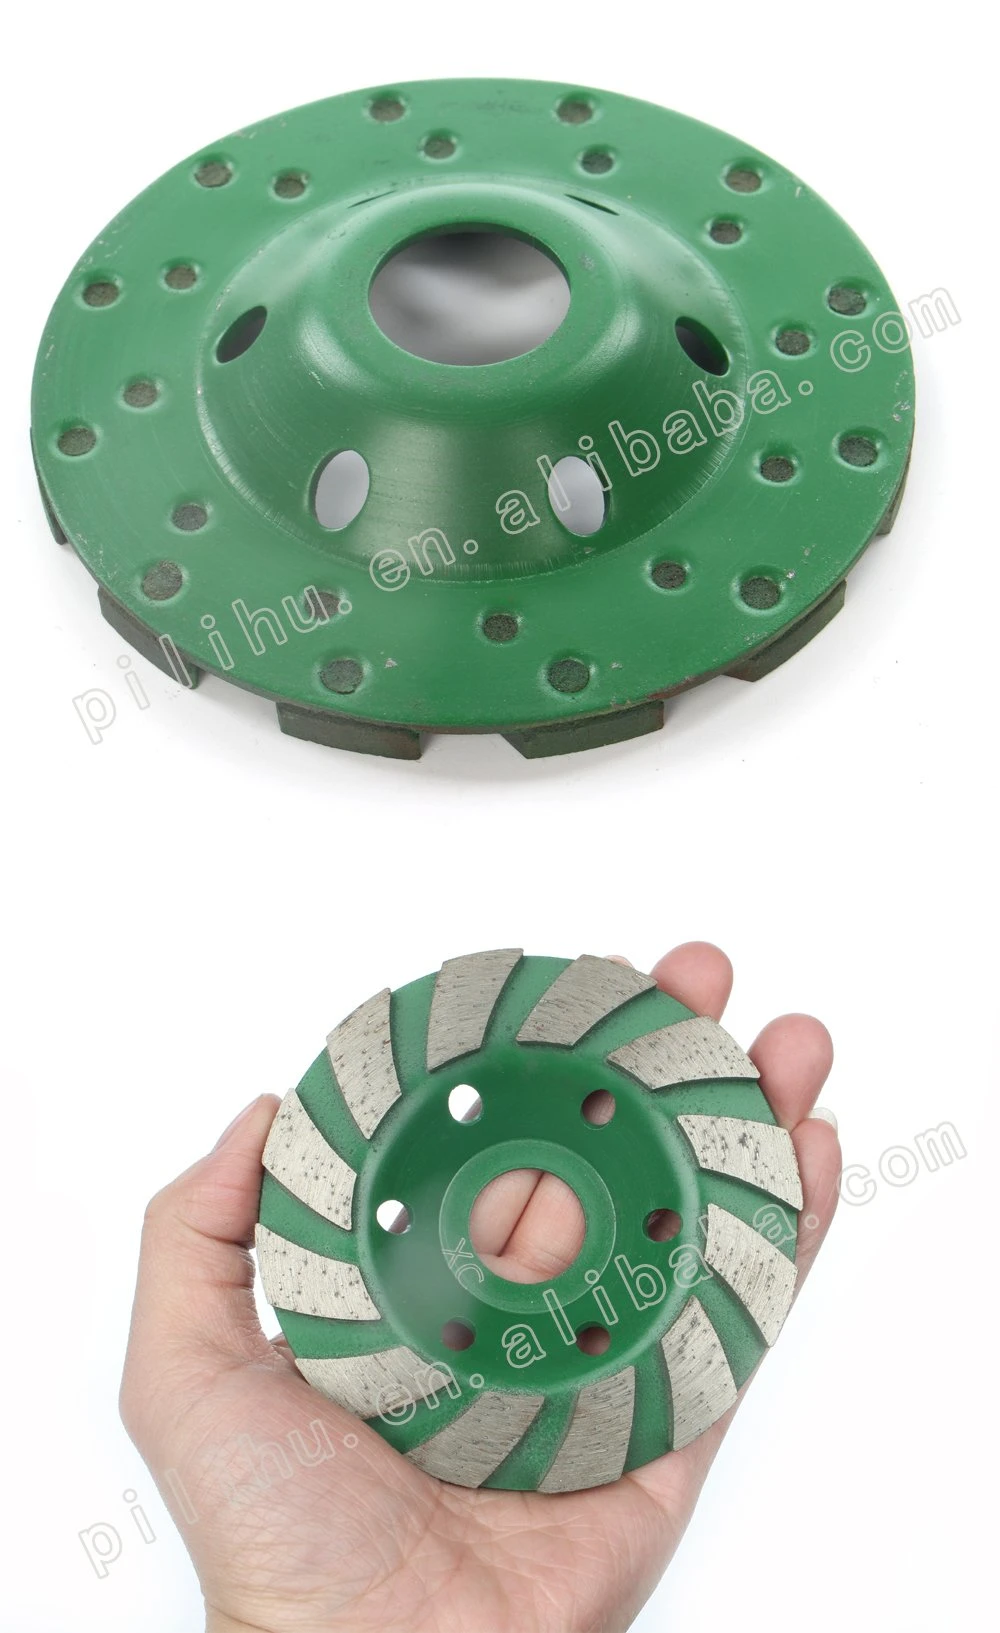 Diamond Tool Stone Concrete 100mm Diamond Cup Grinding Wheel